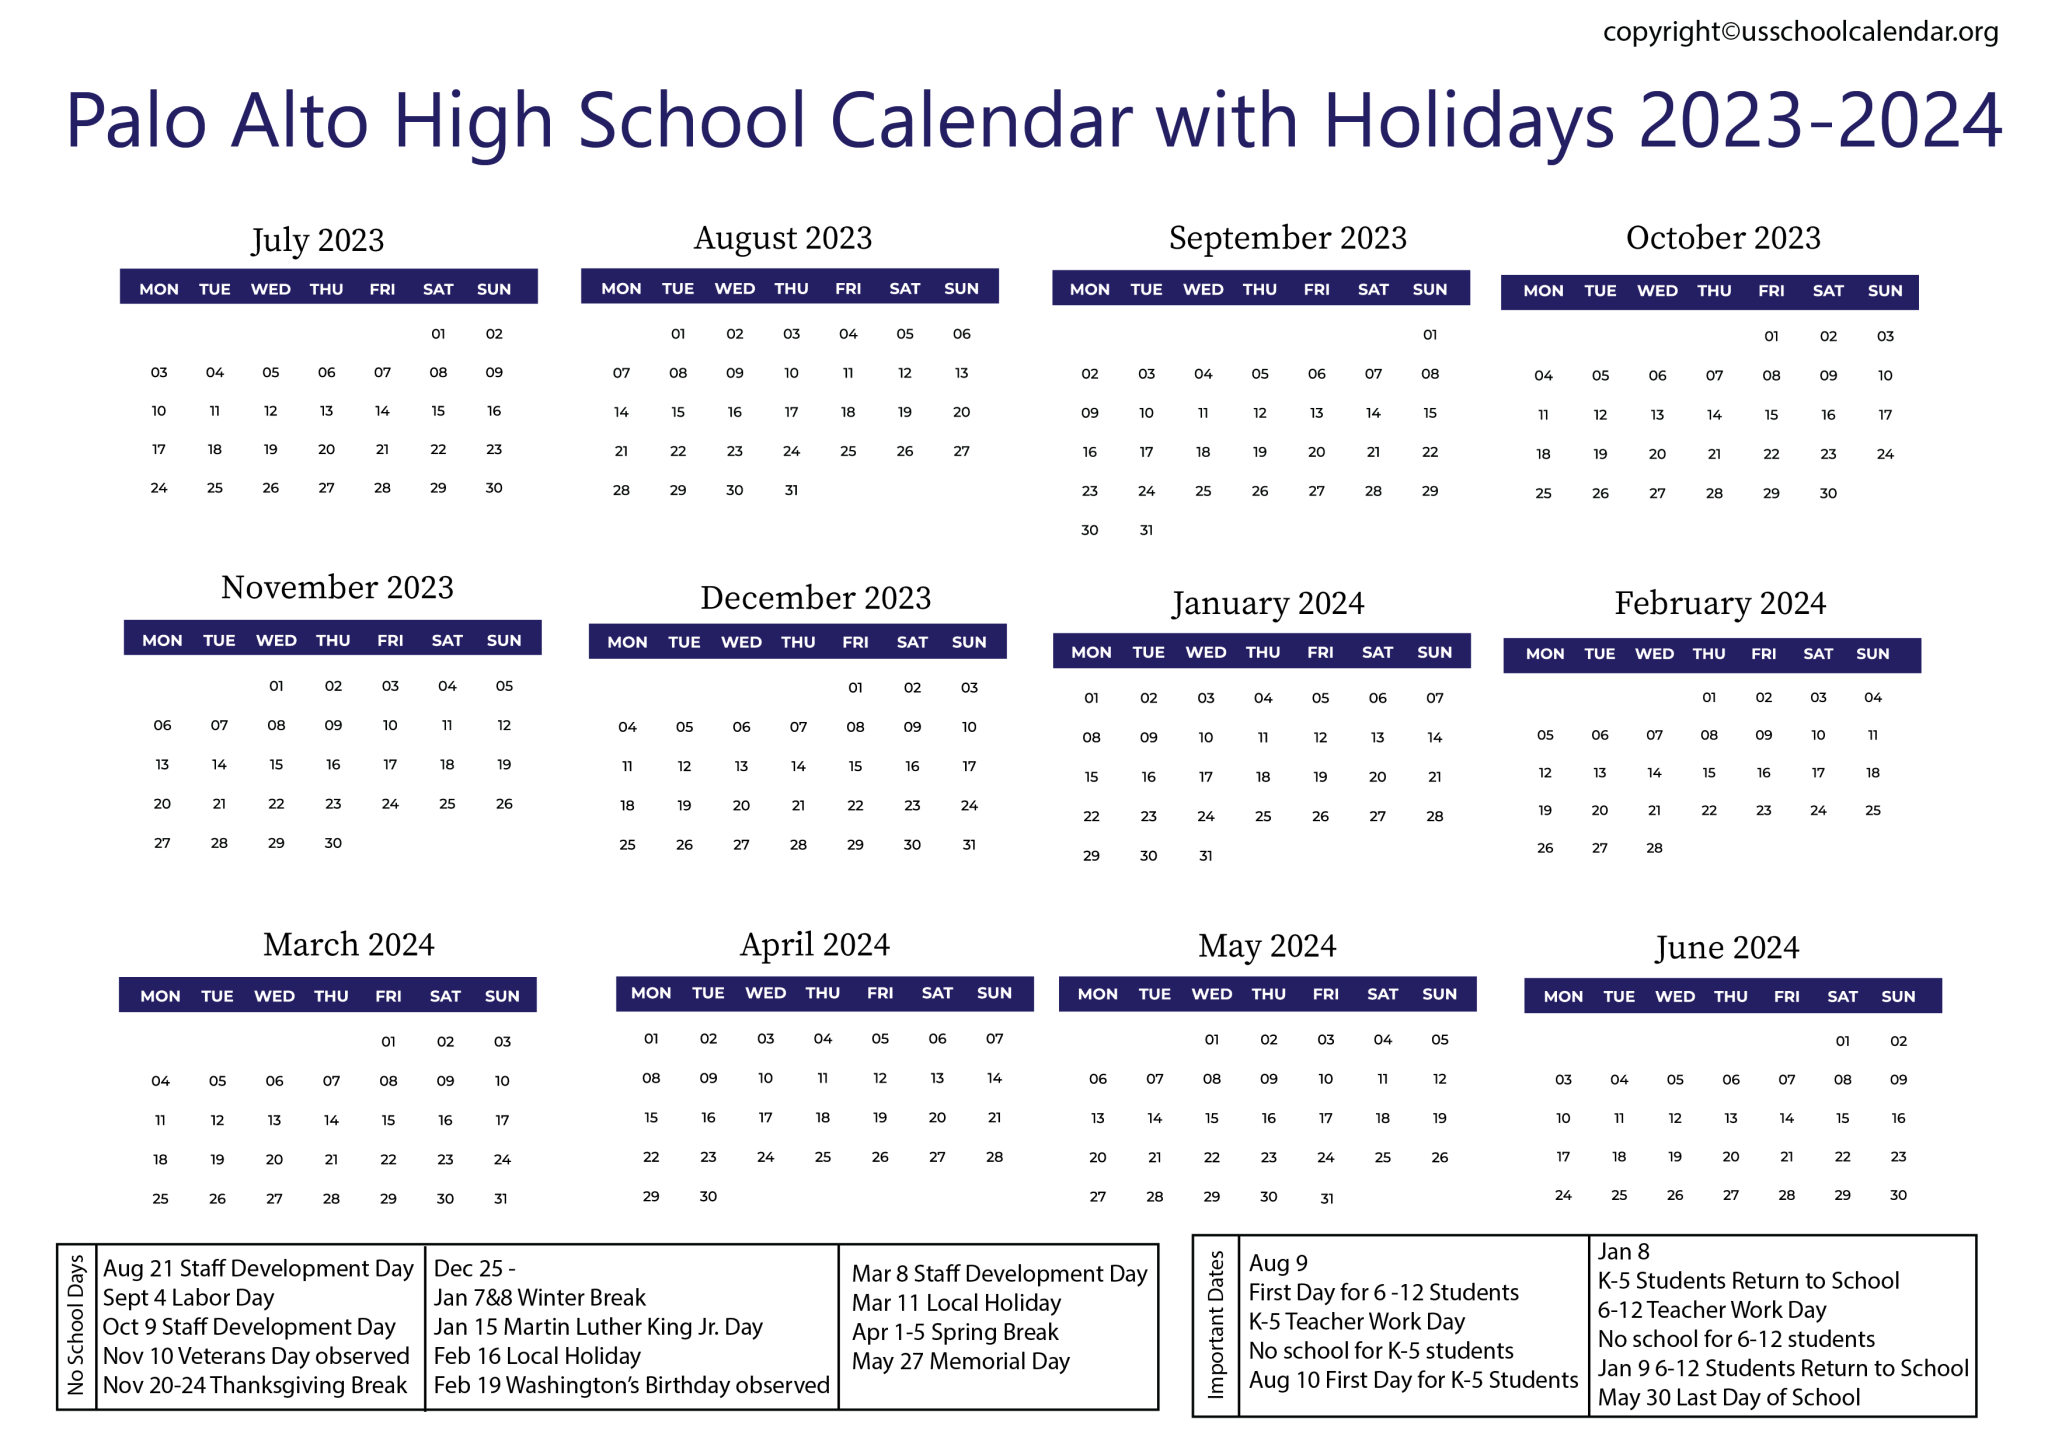 [PAHS] Palo Alto High School Calendar with Holidays 20232024